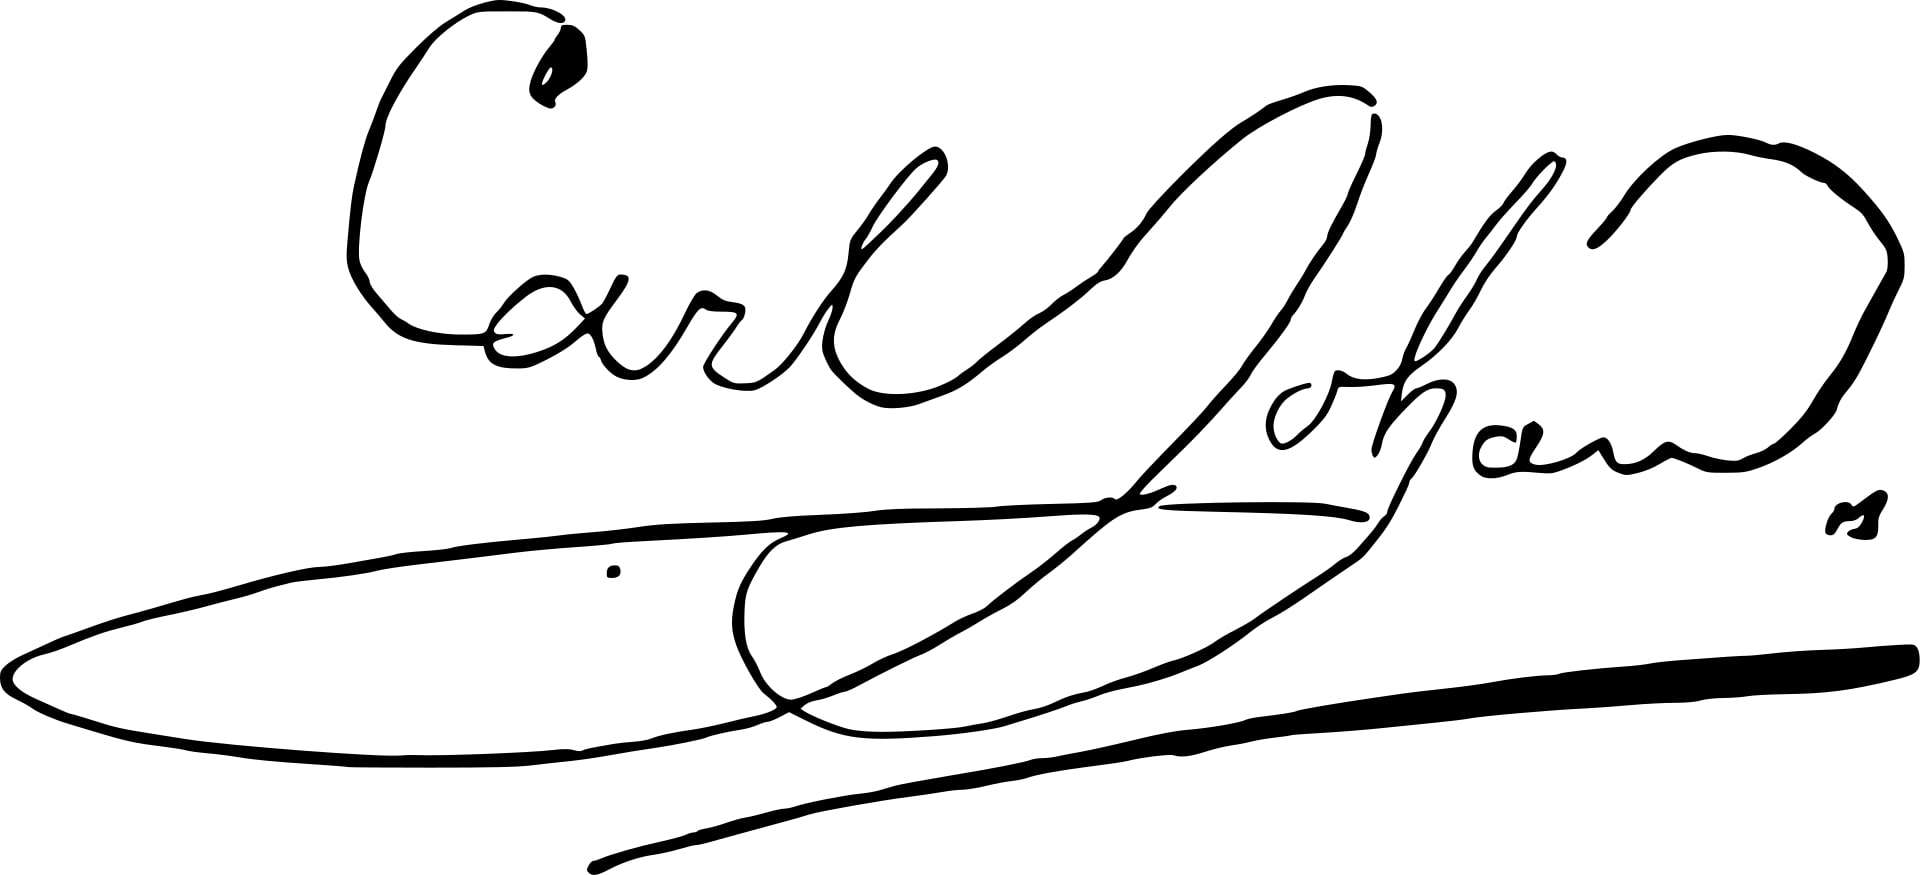 Charles XIV John Signature